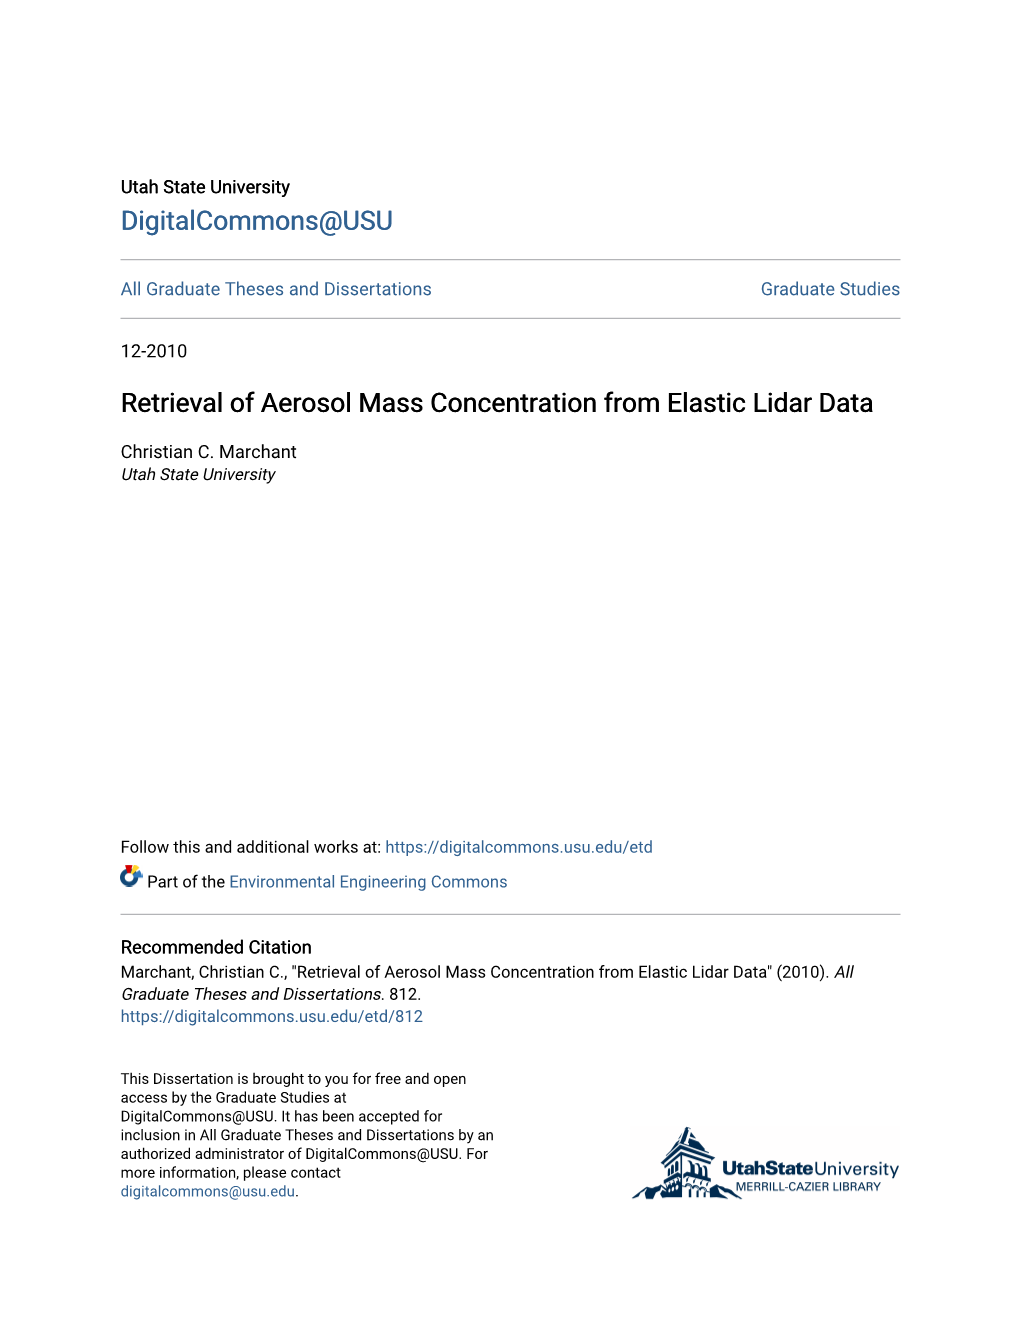 Retrieval of Aerosol Mass Concentration from Elastic Lidar Data